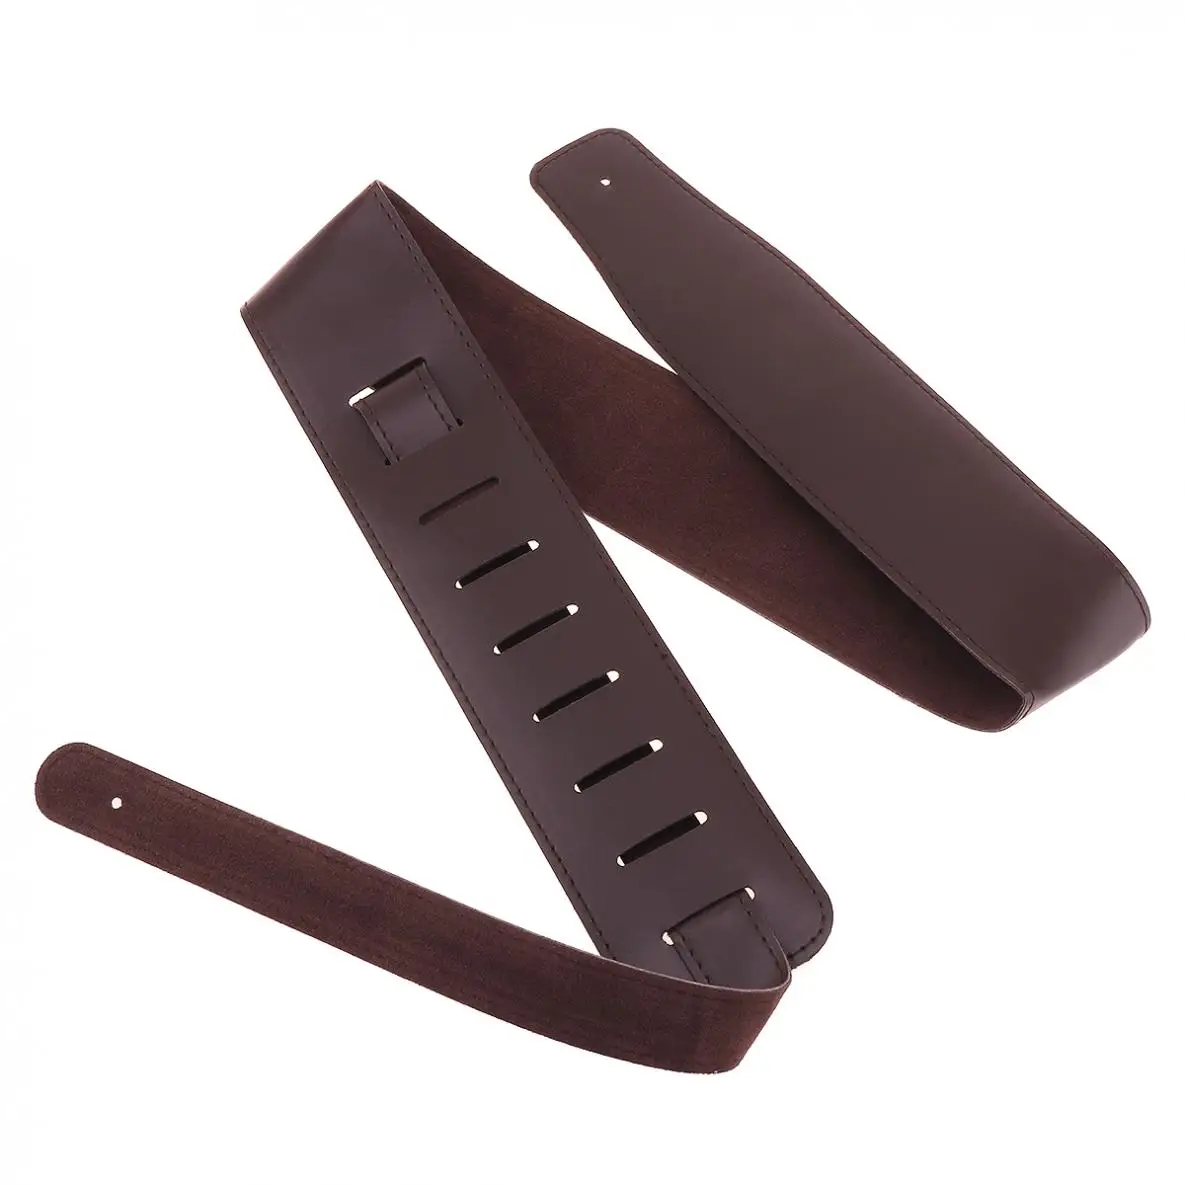 Adjustable Guitar Strap Belt 110-130cm Length PU Leather Acoustic Folk Electric Bass Guitar Belt Musical Instruments Accessories